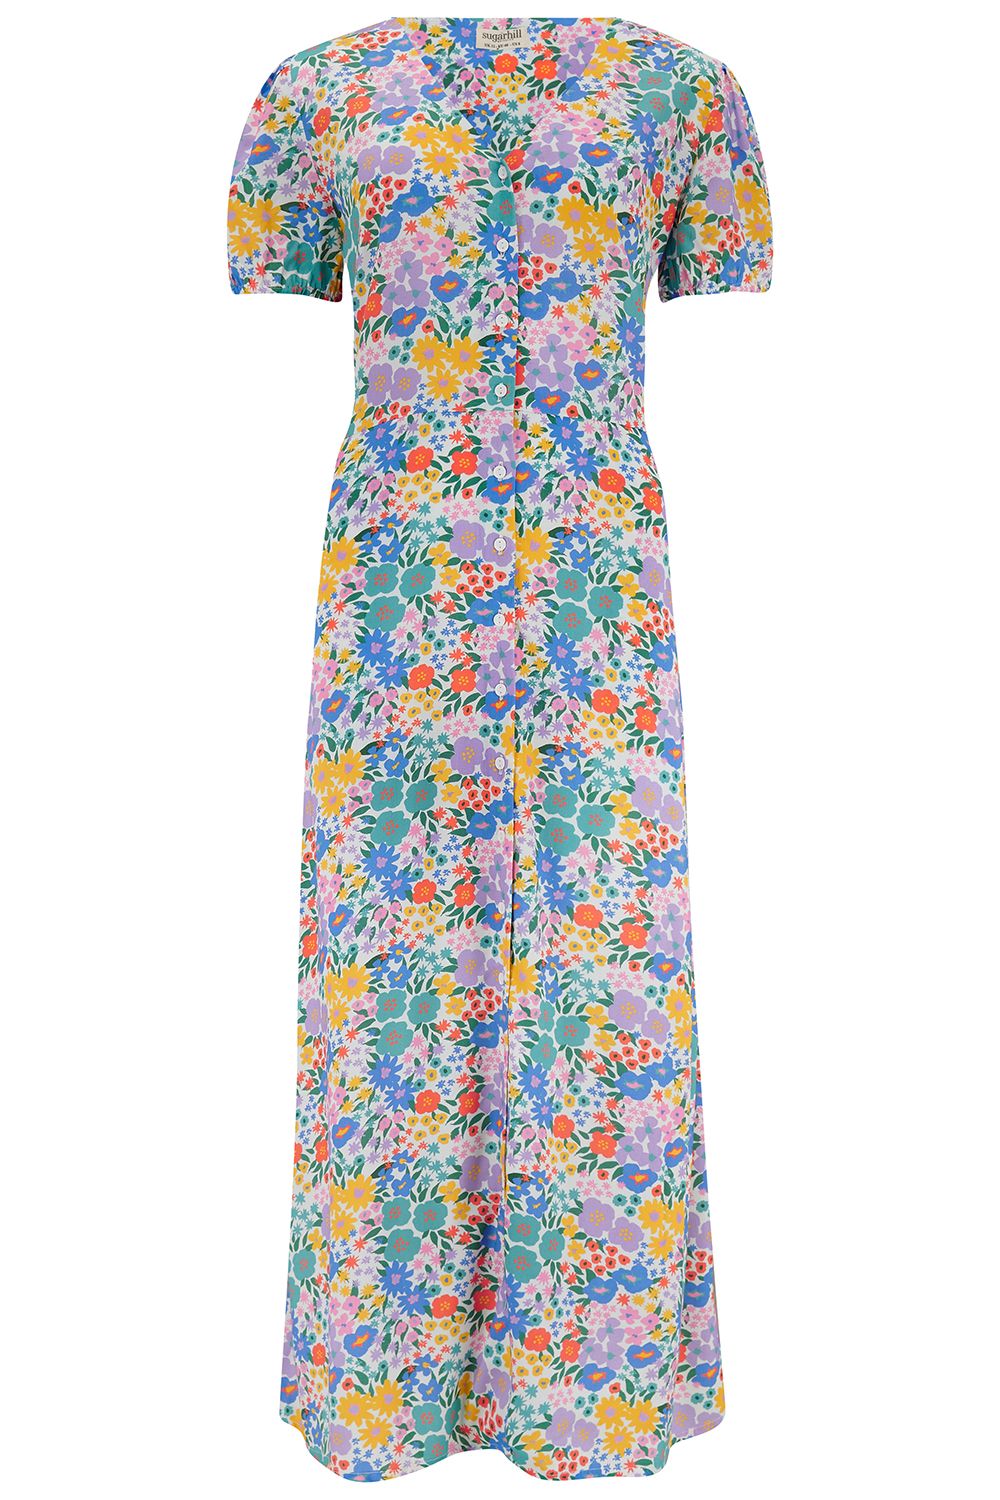 *Irene V-Neck Maxi Dress - Multi, Busy Floral*